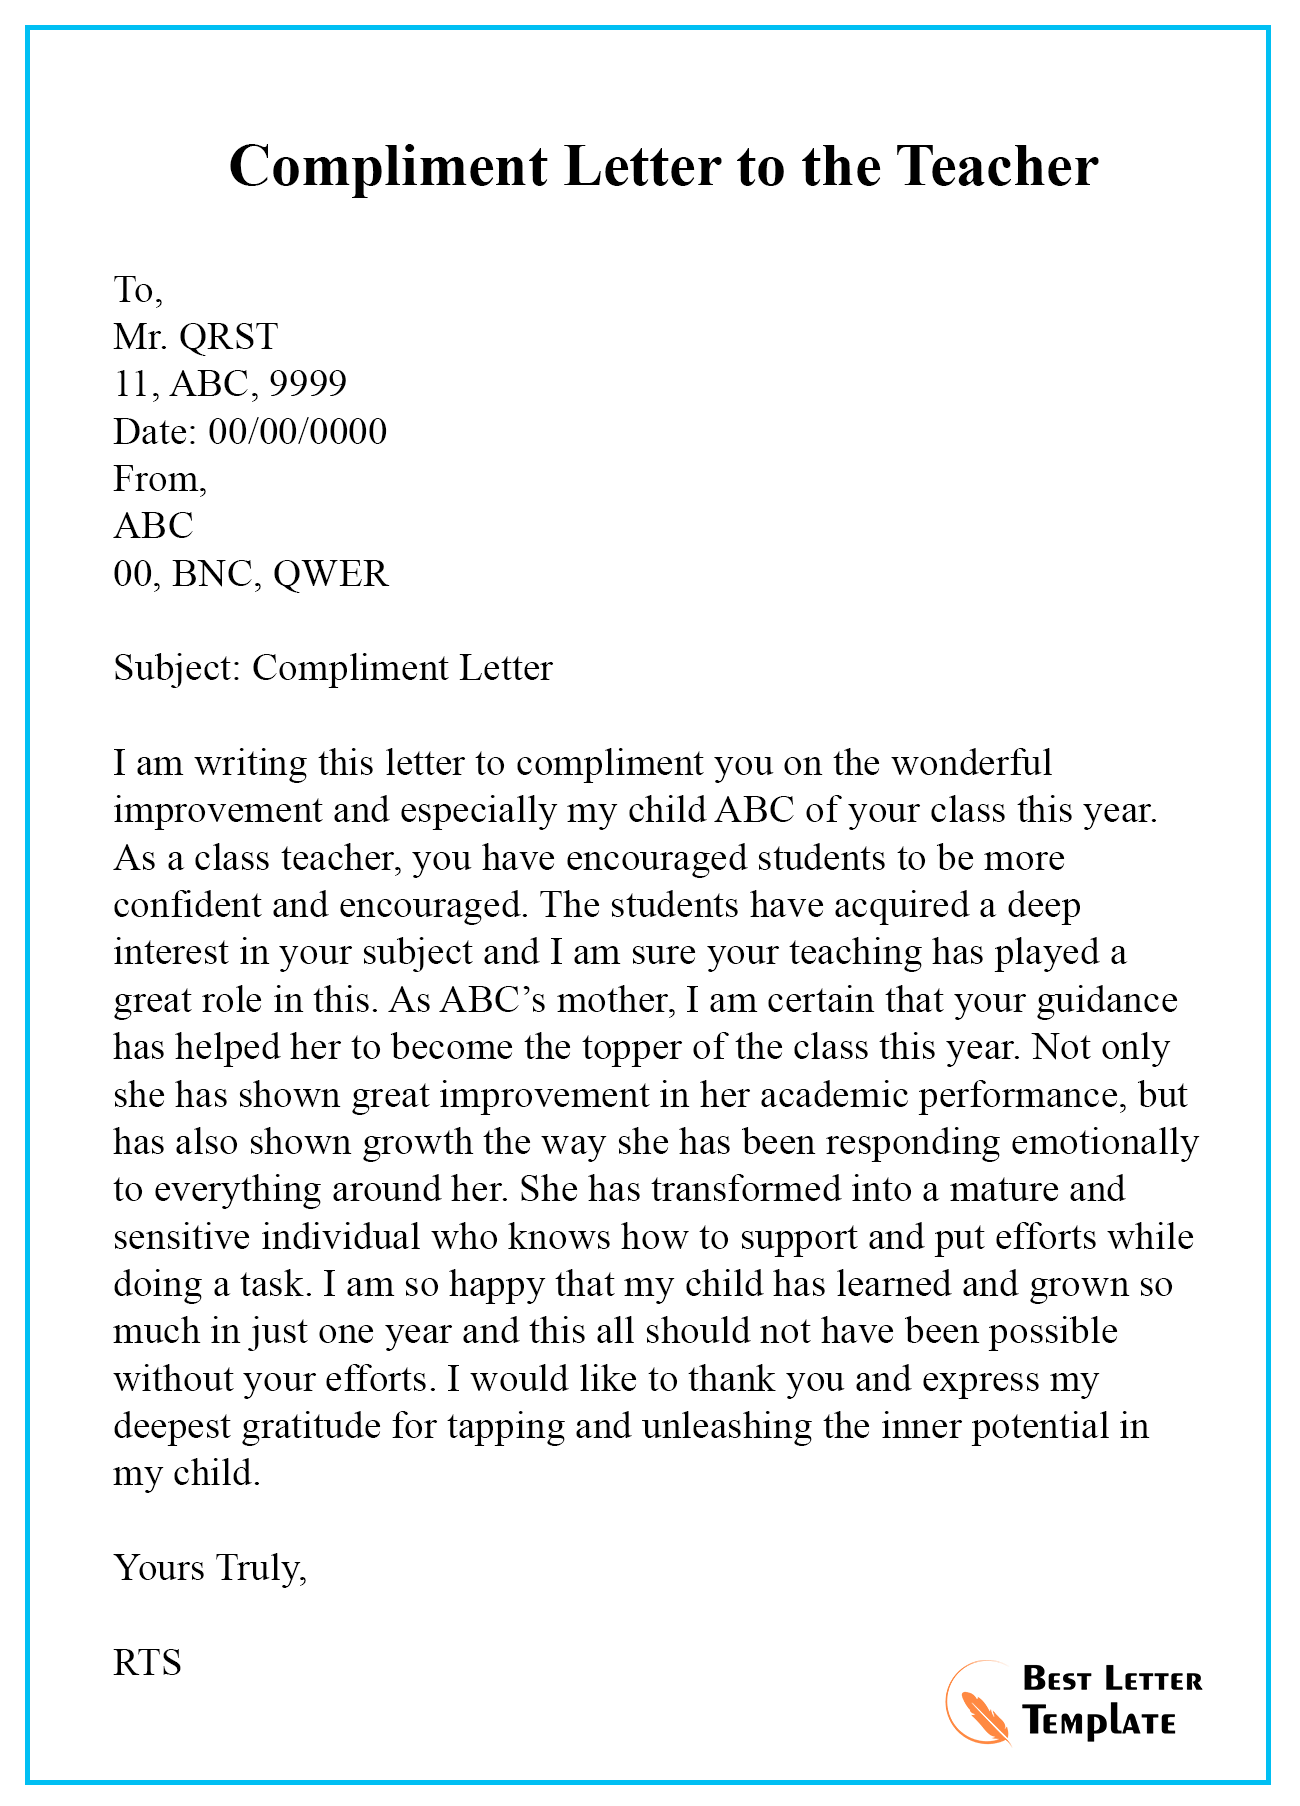 Compliment Letter Sample from bestlettertemplate.com